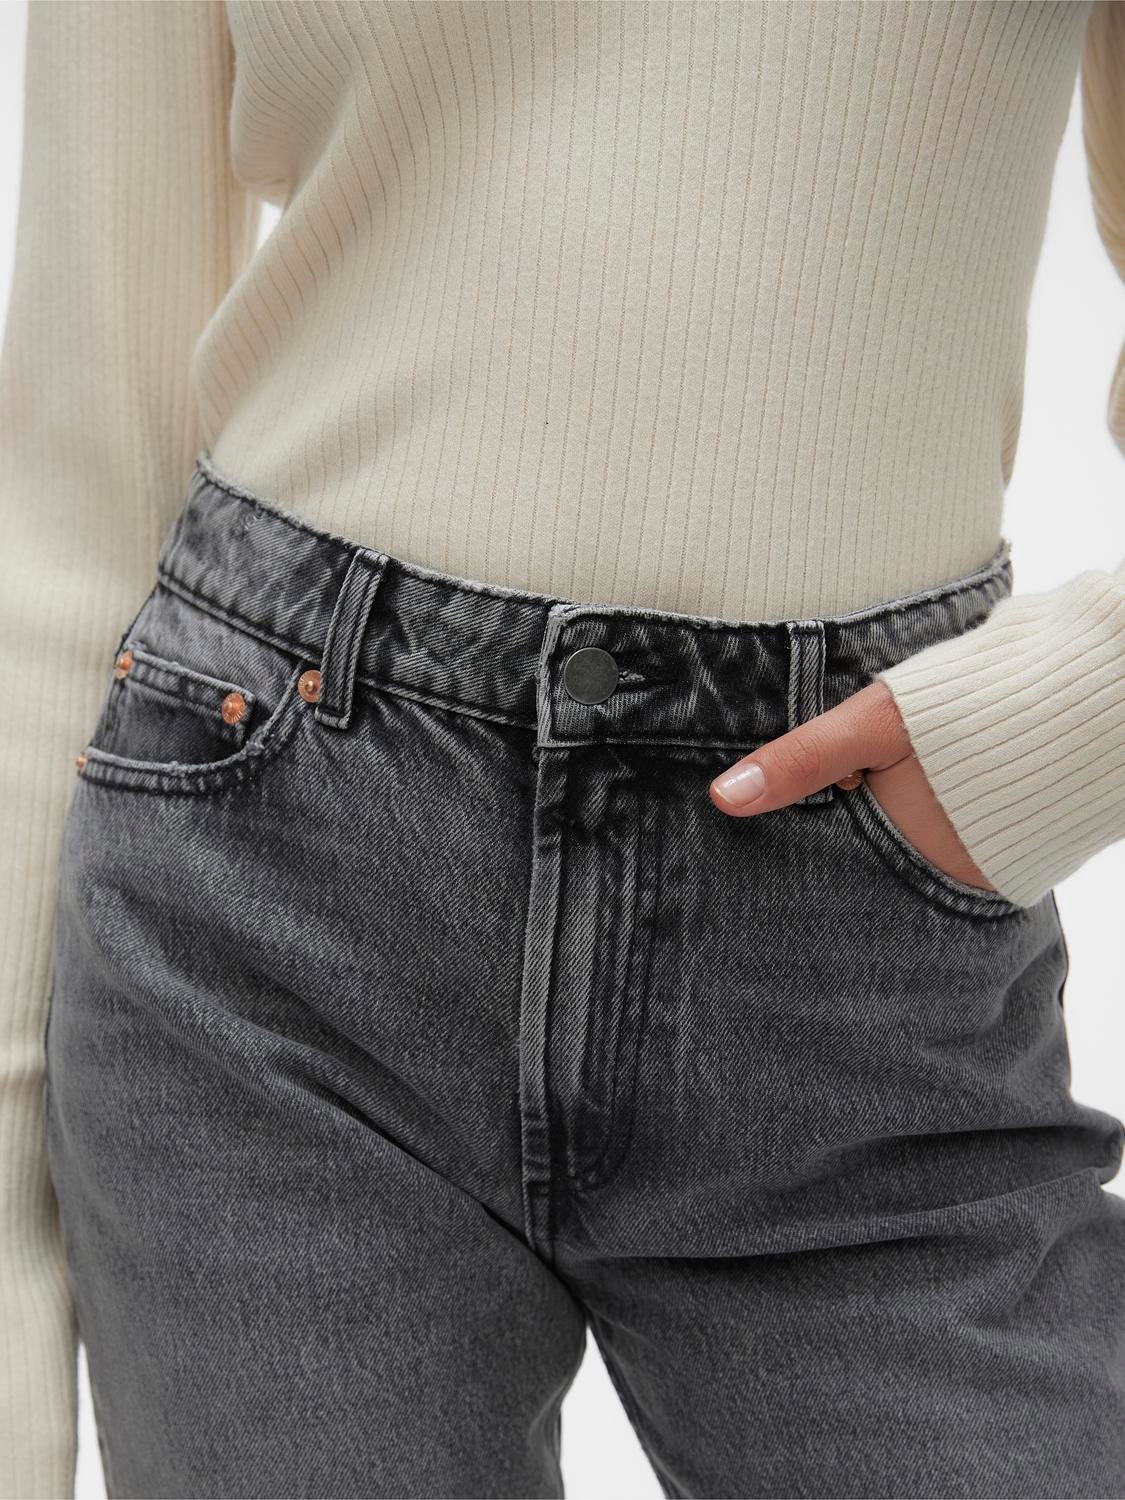 Vero Moda VMHAILEY Straight Fit Jeans -Medium Grey Denim - 10302819